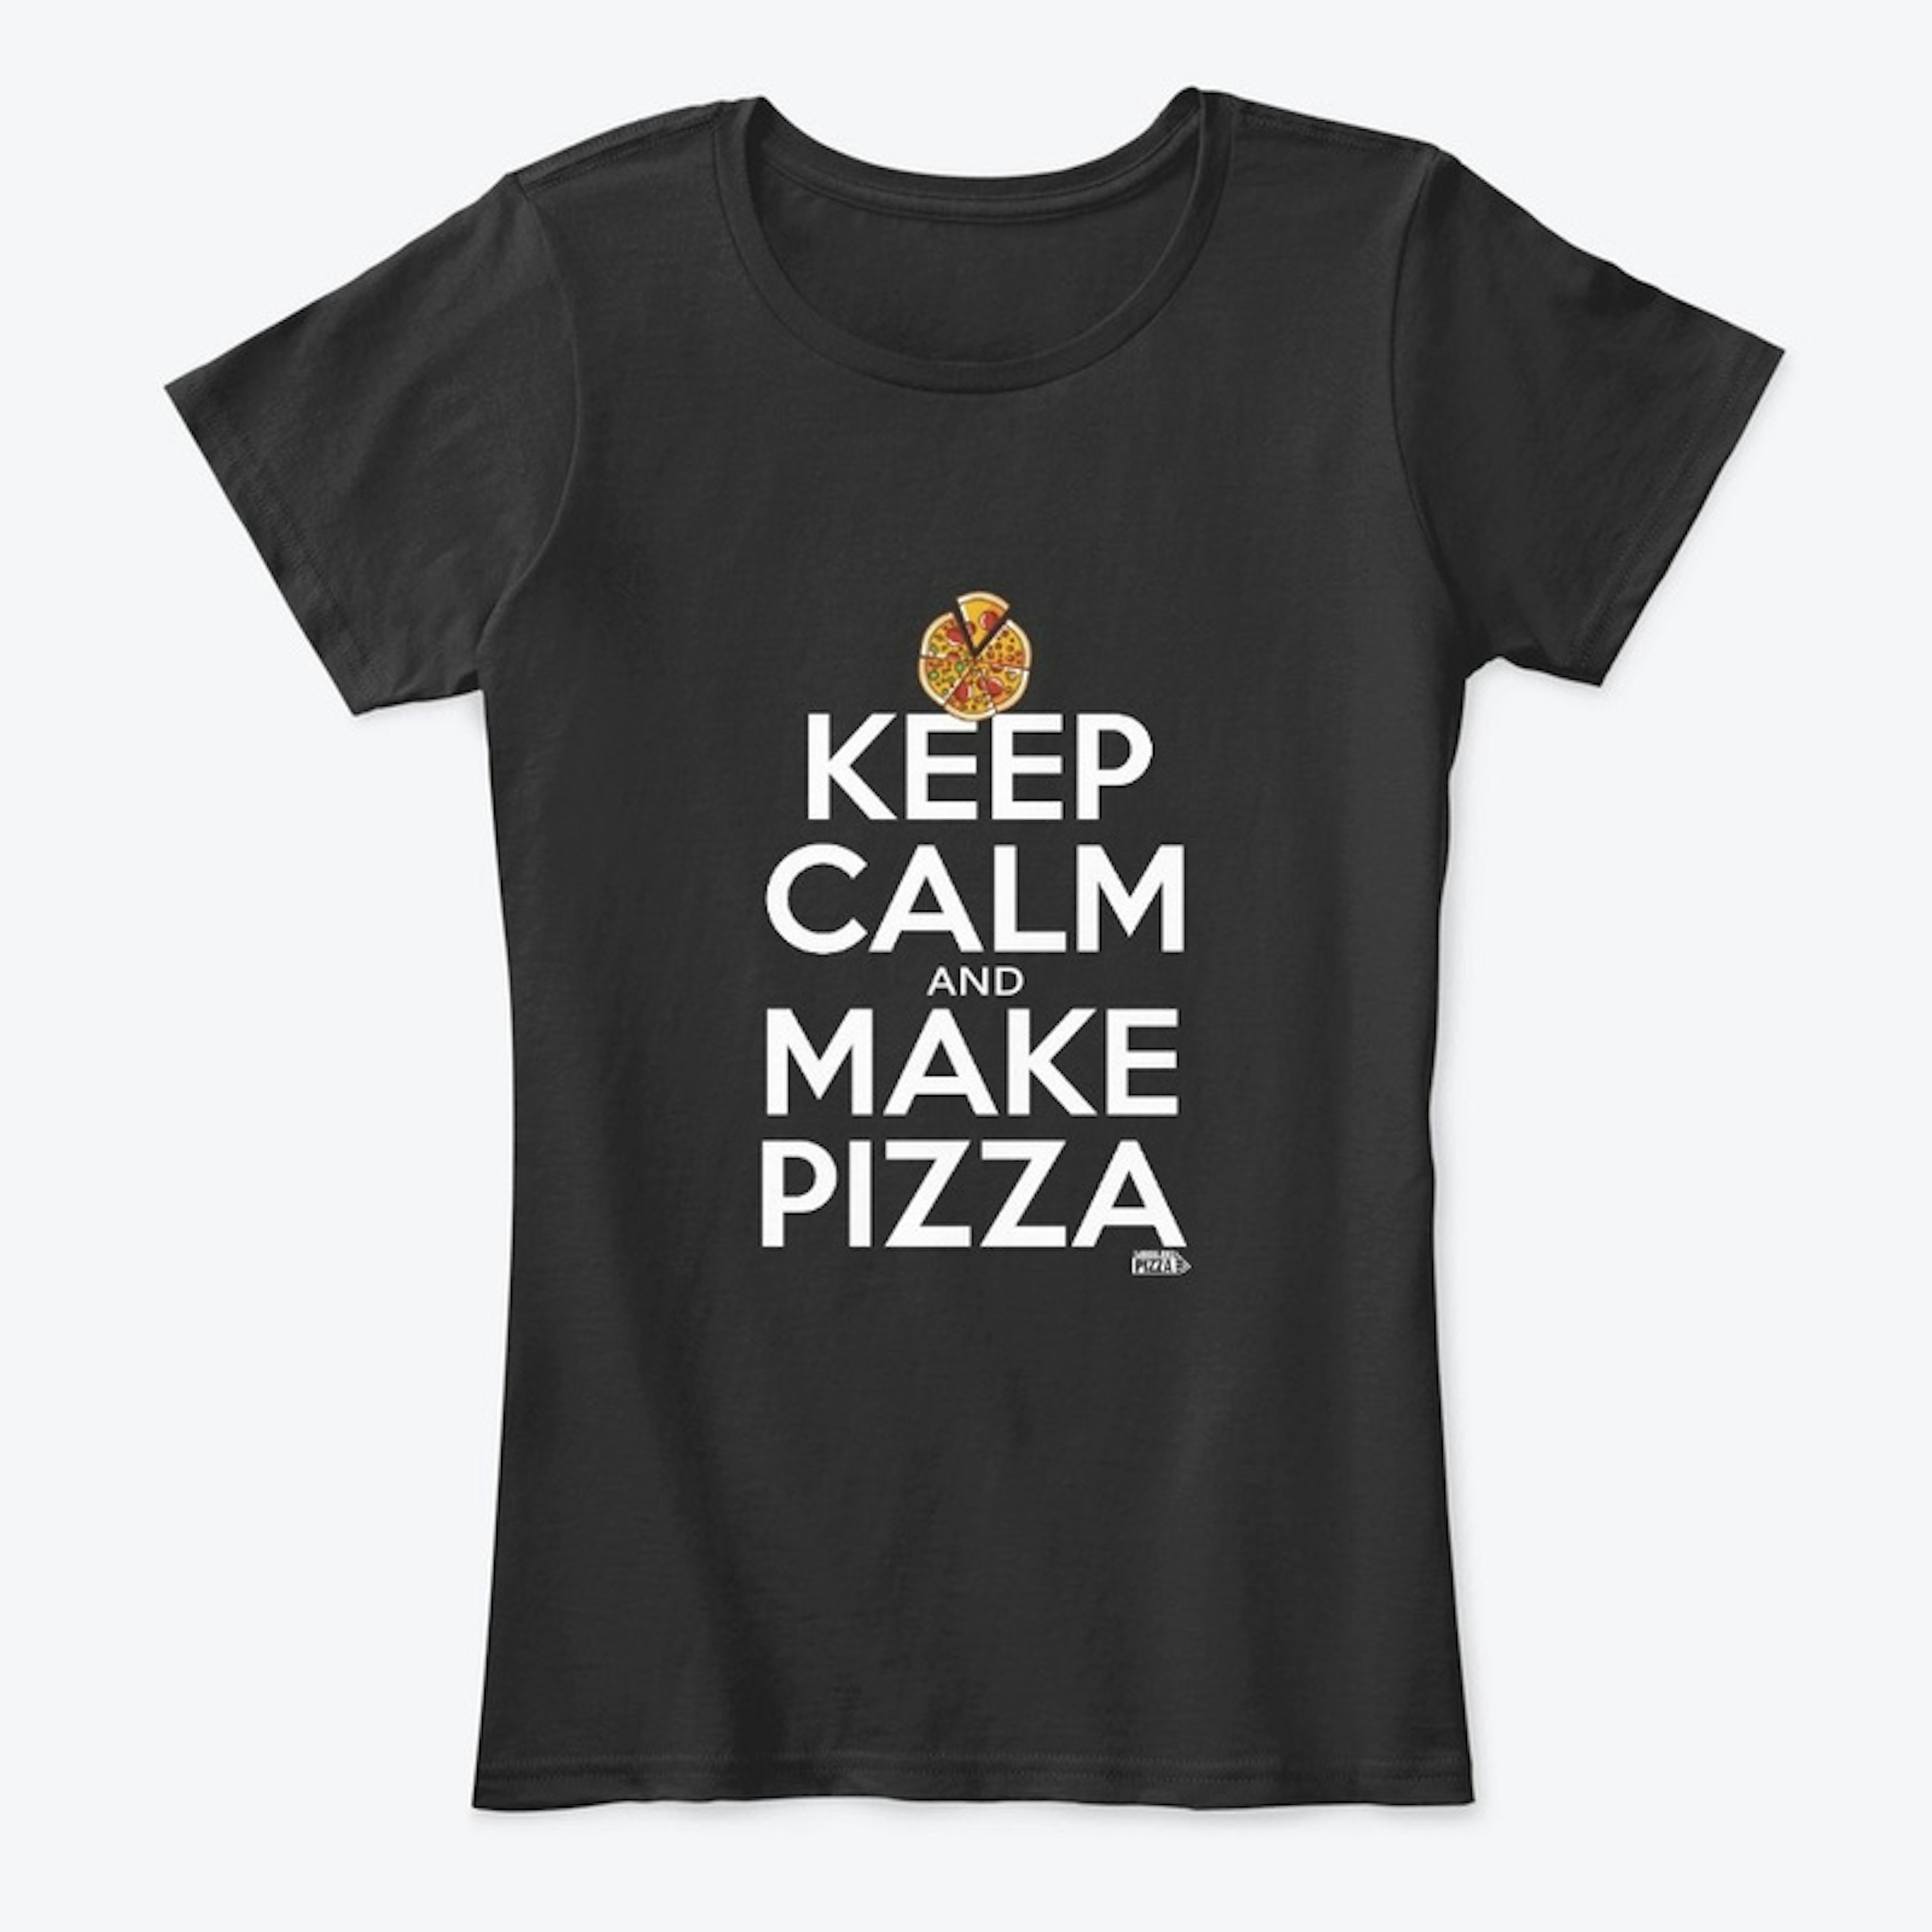 Keep calm and make pizza